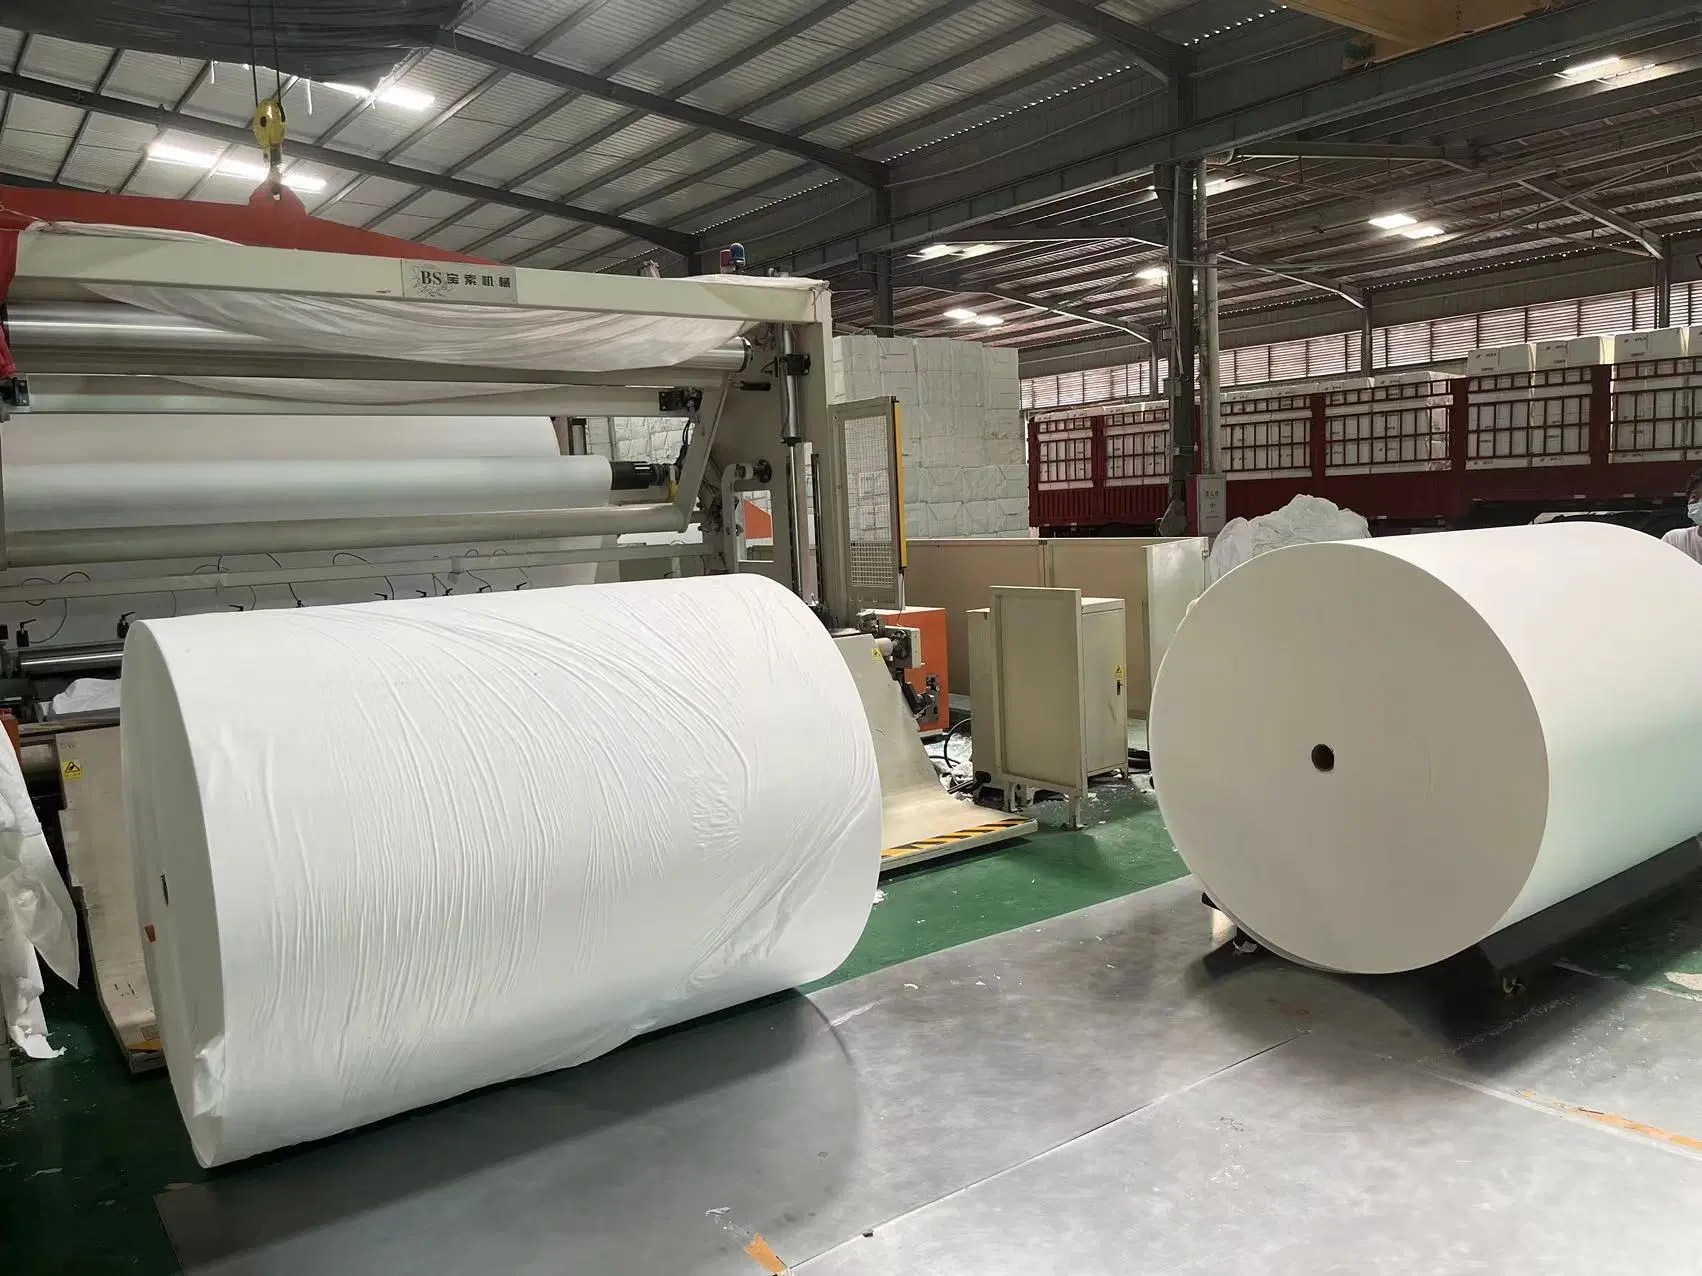 Jiayi Parent Tissue Roll for Napkin Handkerchief Toilet Towel Raw Material